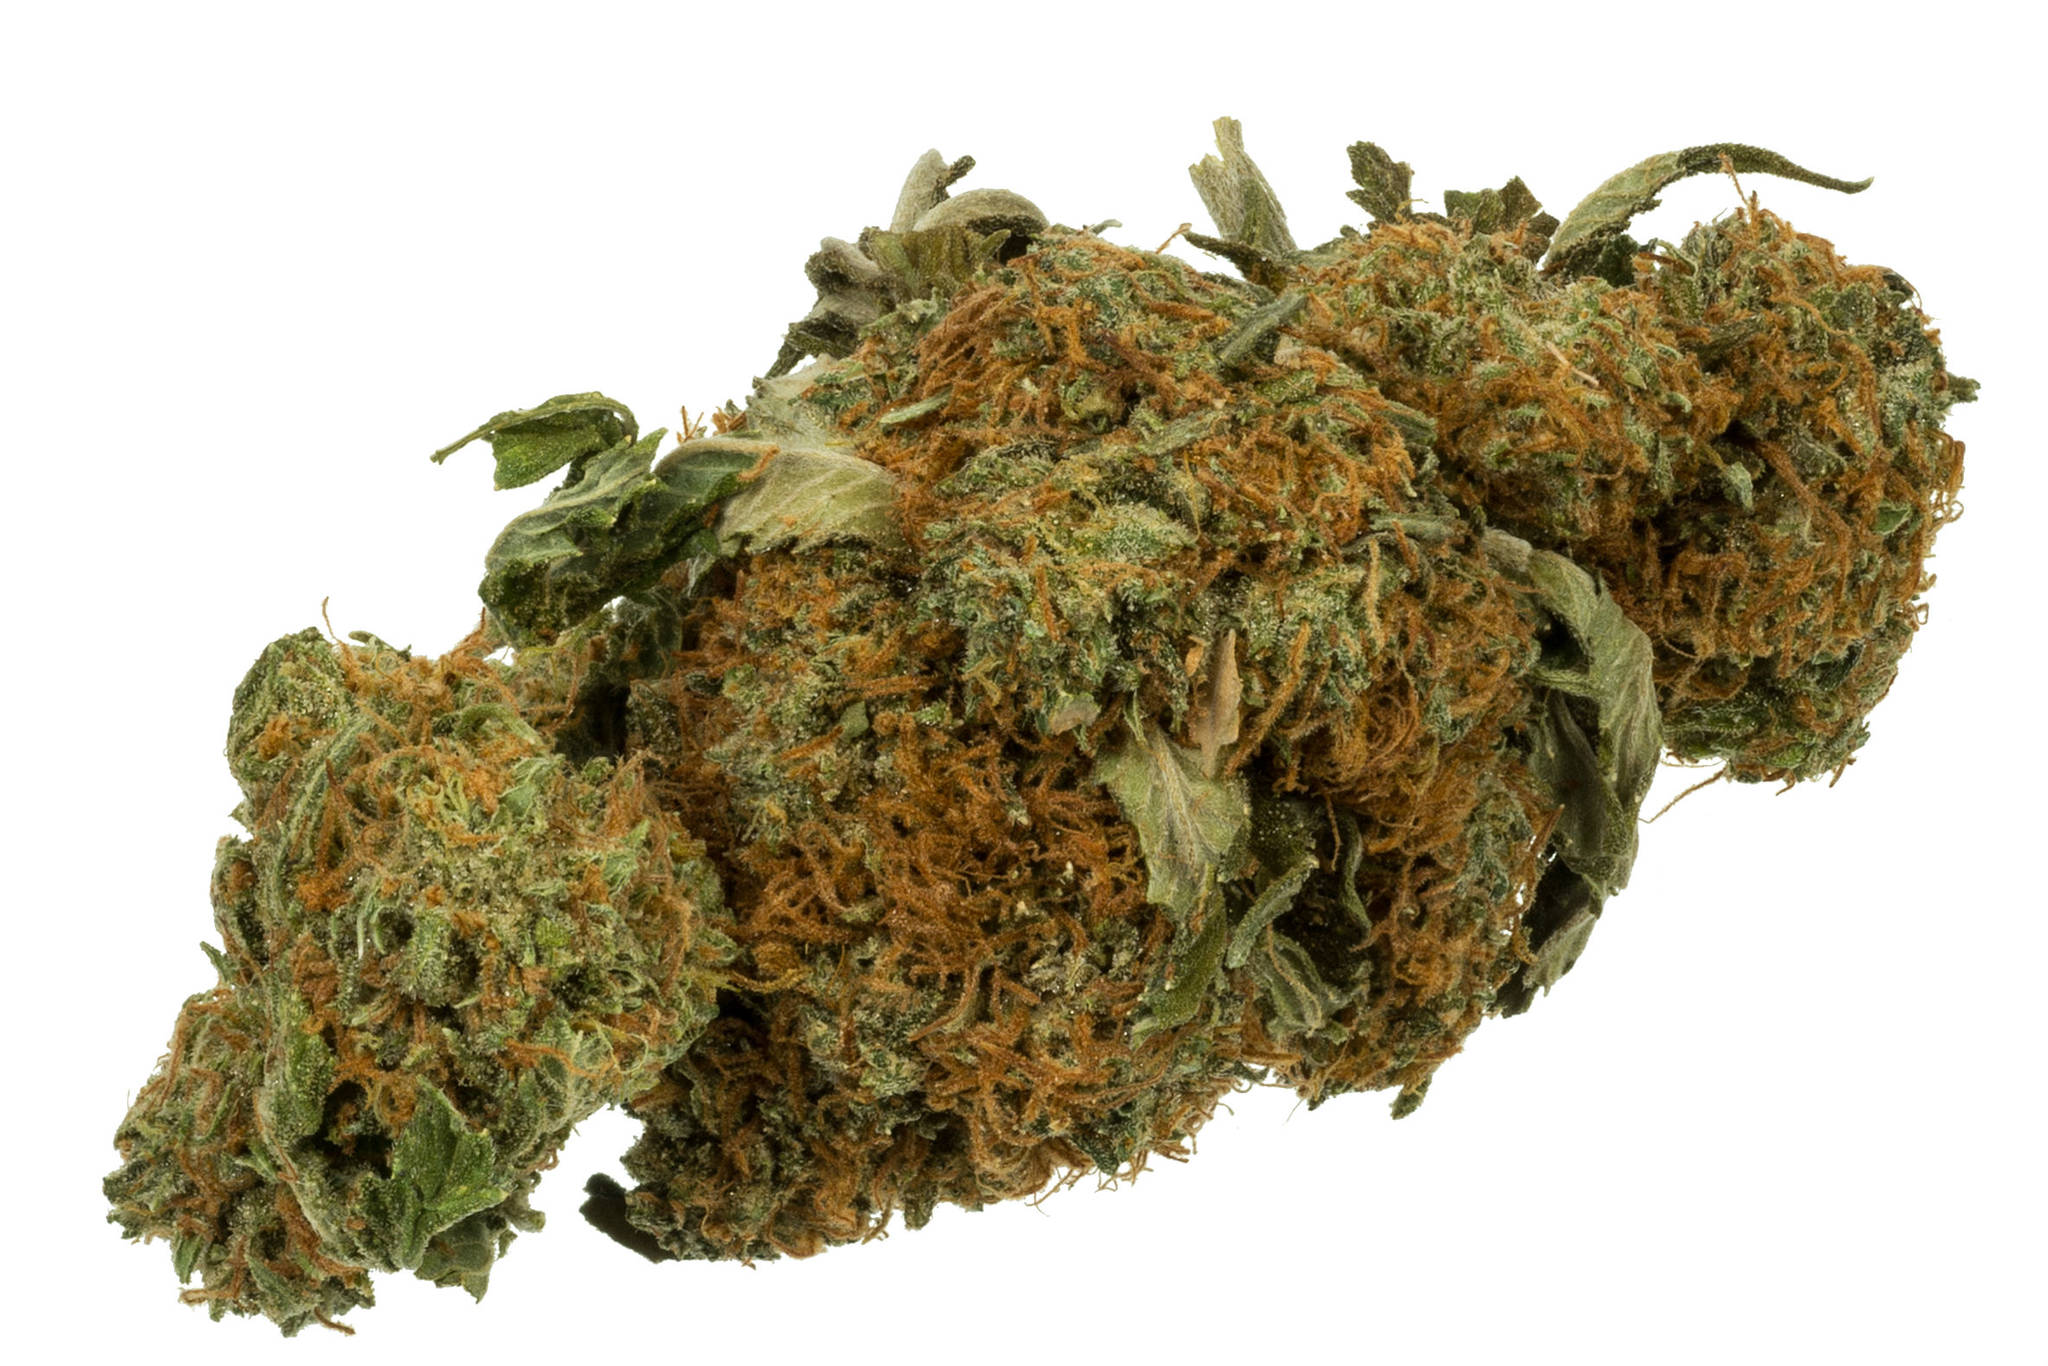 Pot company recalls cannabis product sold in Alberta over contamination concern